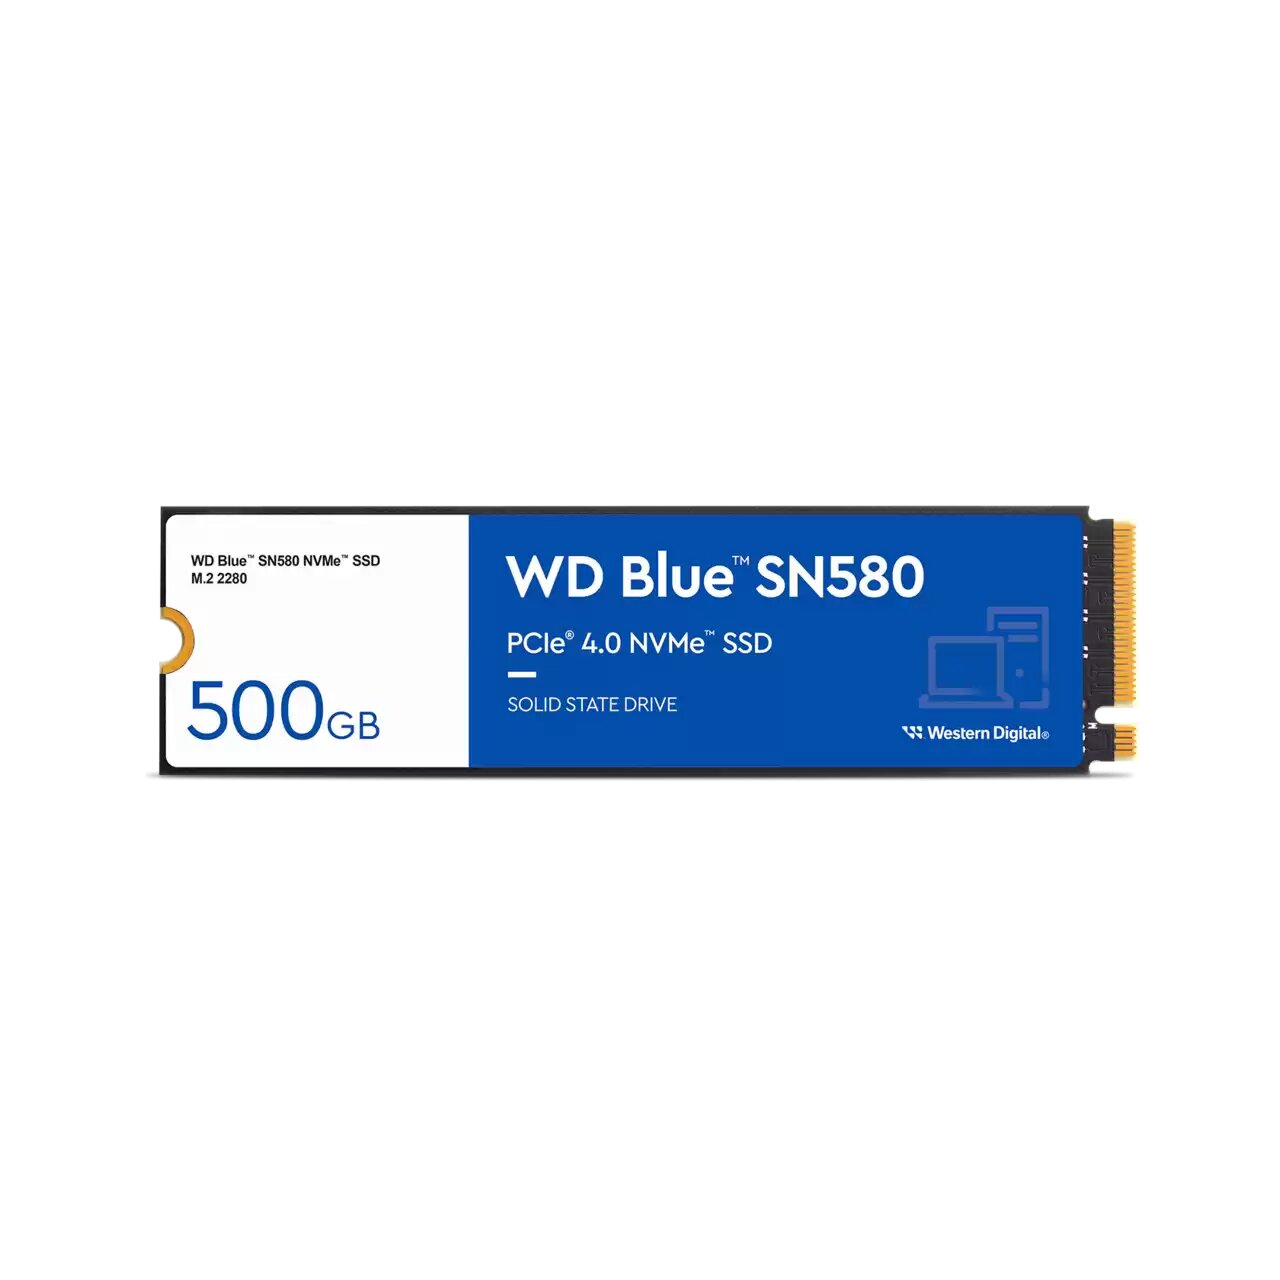 WD 1To 7200tr BLUE 64Mo SATA III WD10EZEX - Disque dur 3.5 interne